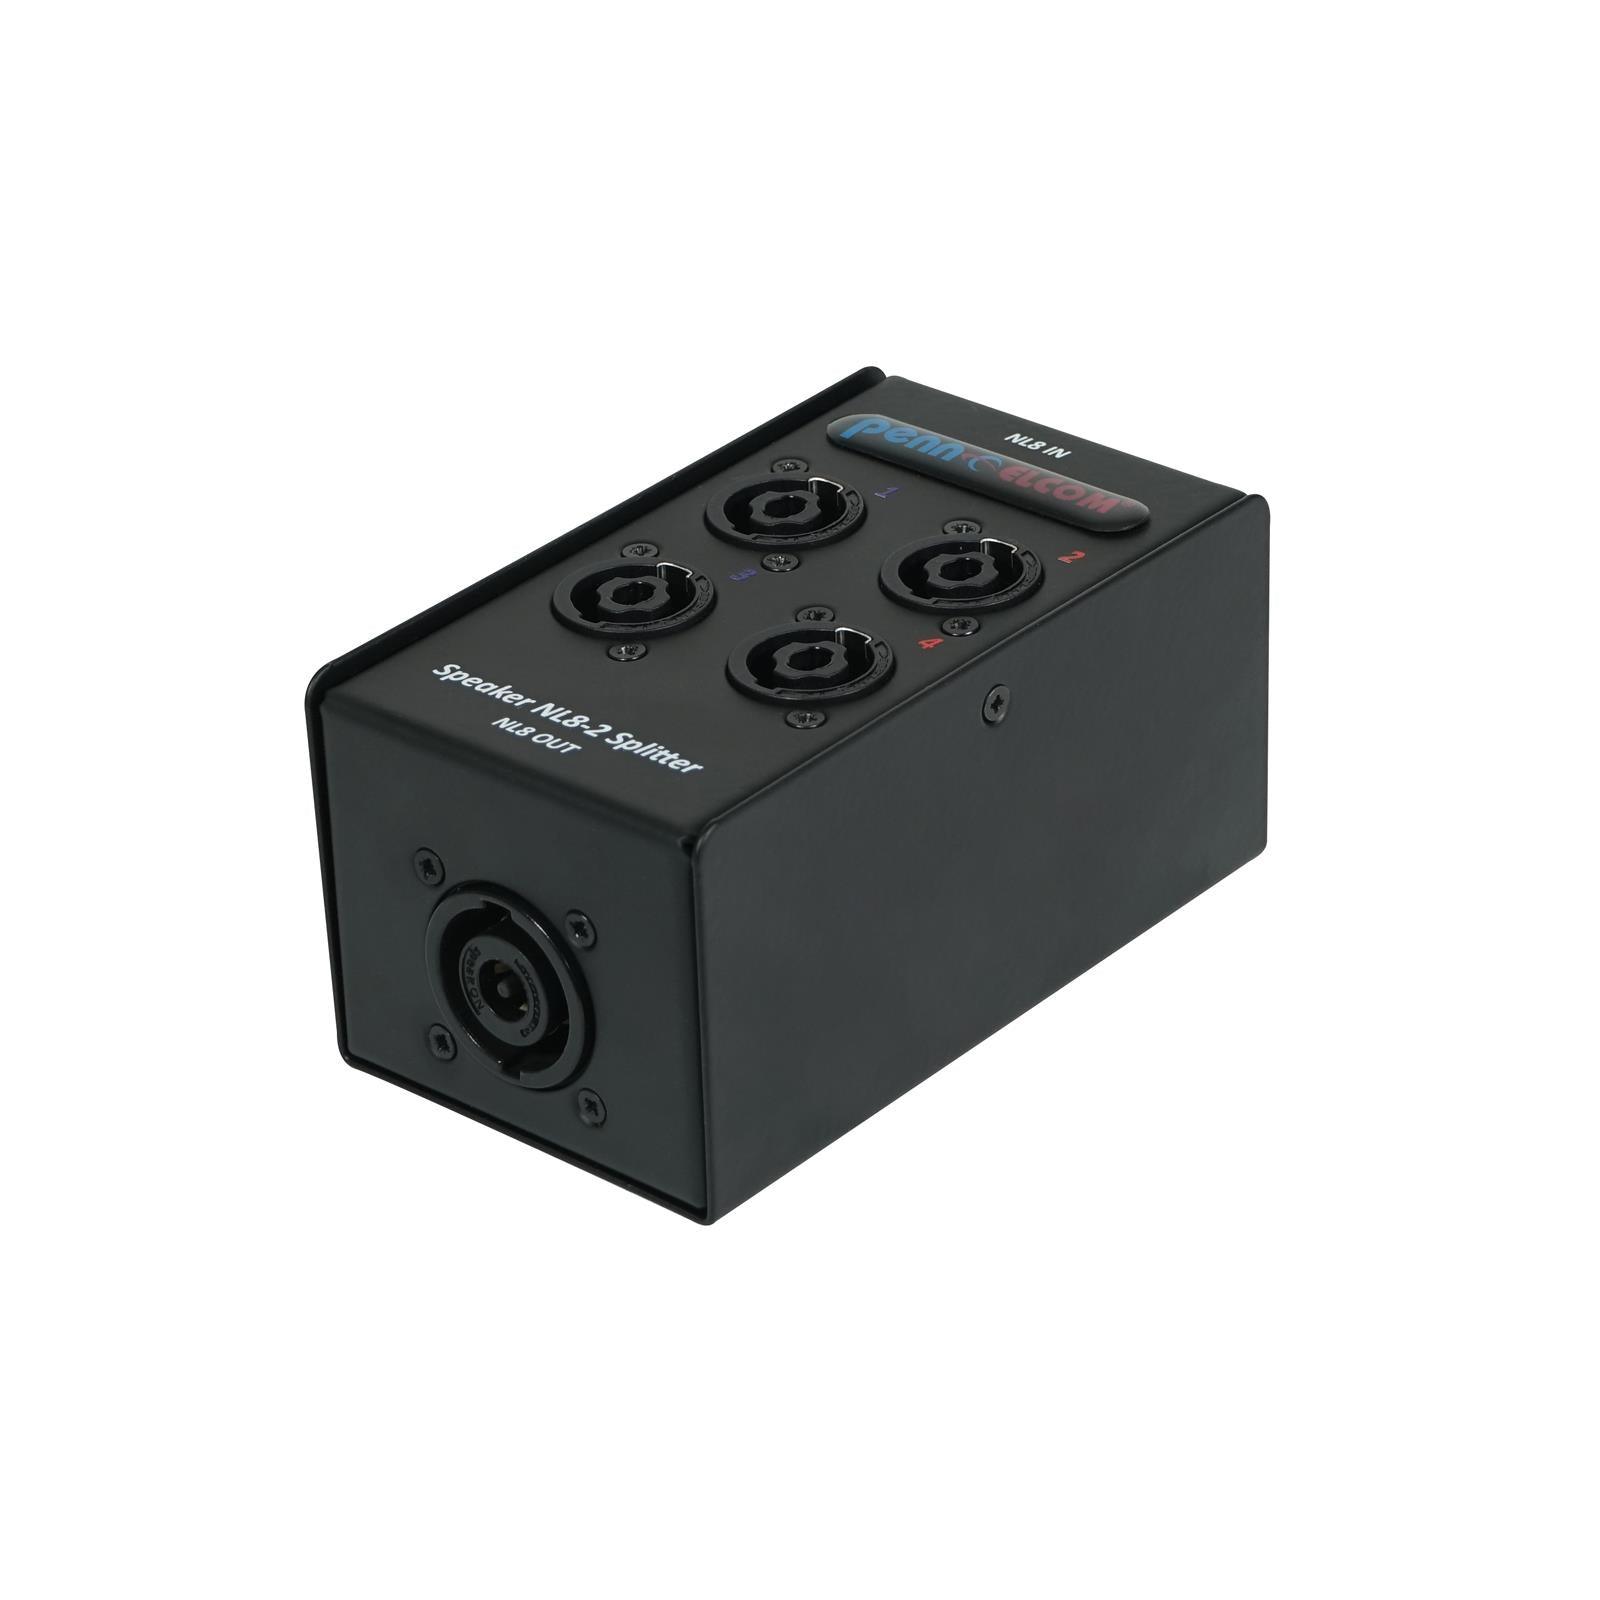 Penn Elcom R2SP82G2 Slimline 4-Way Speaker Splitter Box Feed Thru - DY Pro Audio